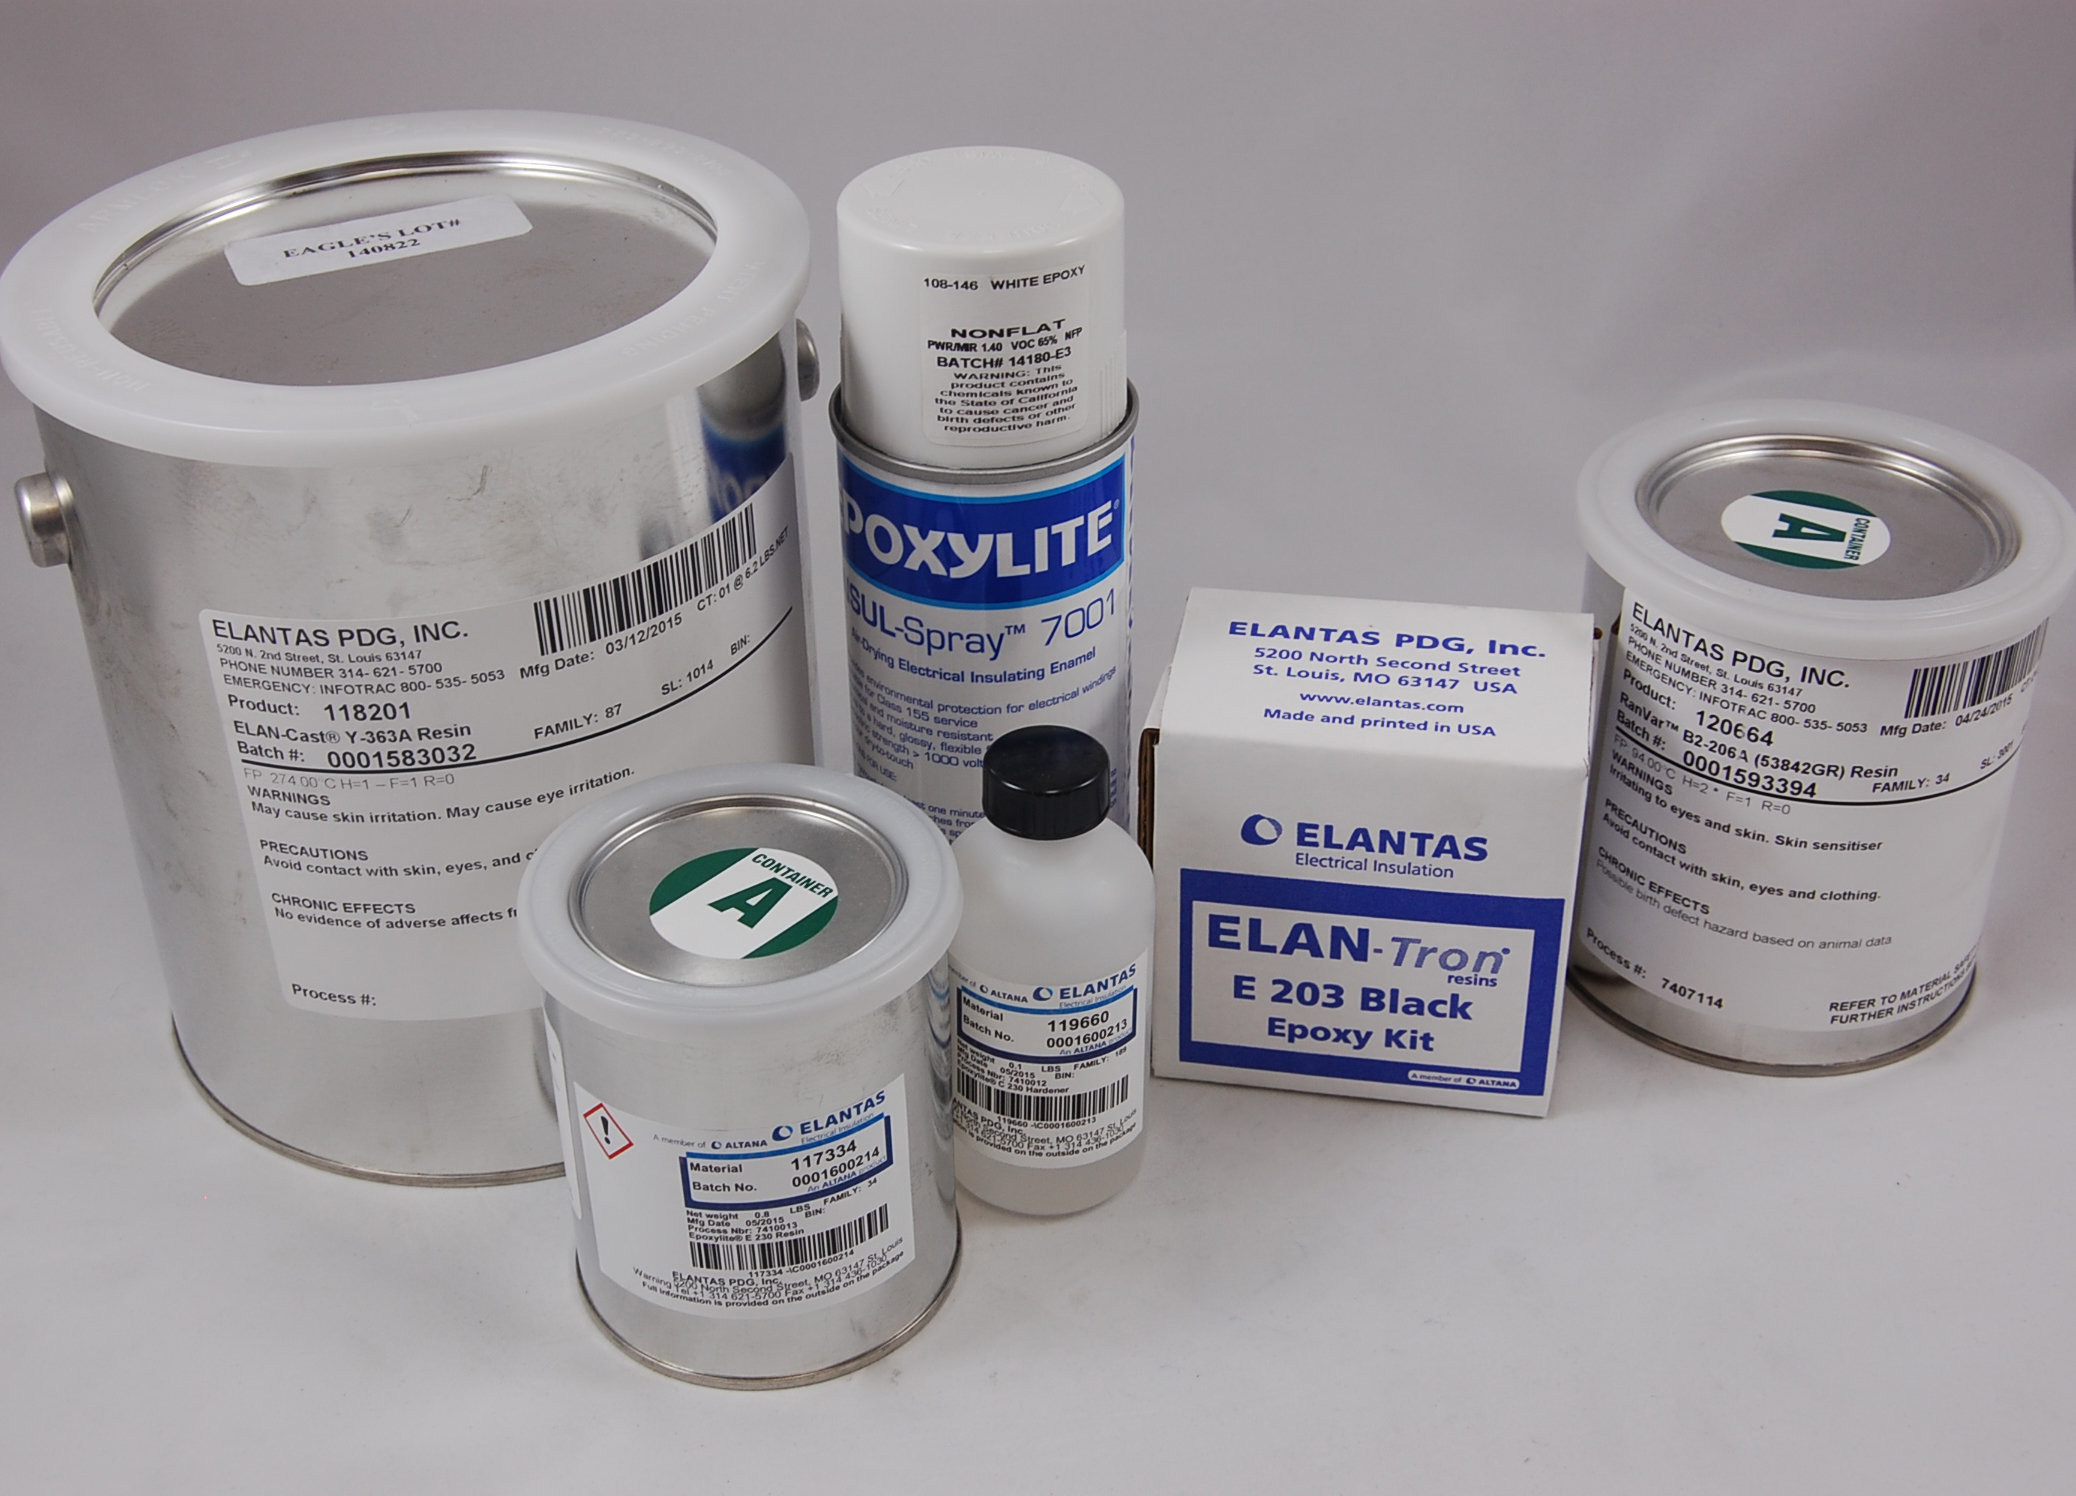 Esterlite 605 Precatalyzed Polyester Impregnating Resin 180°C, clear, 5 GALLON pail (48 lb)